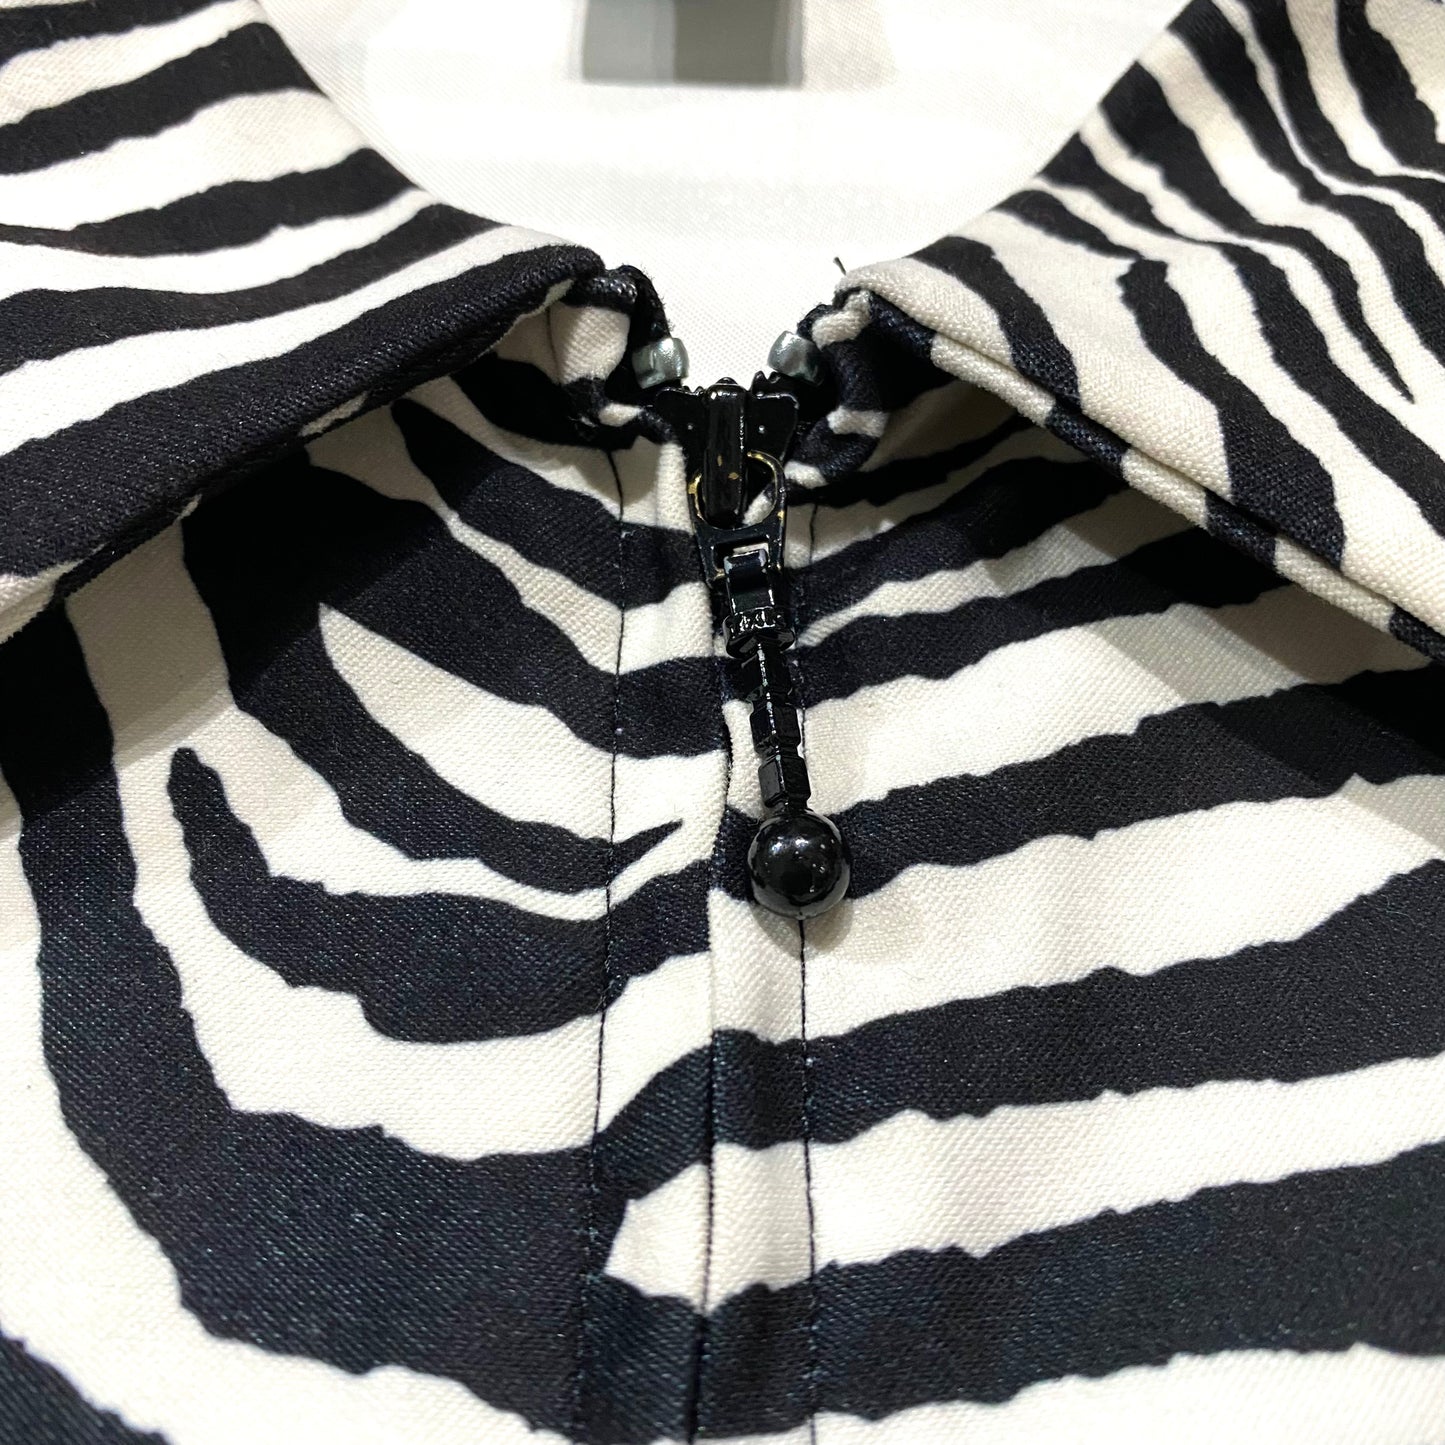 Zebra pattern jacket